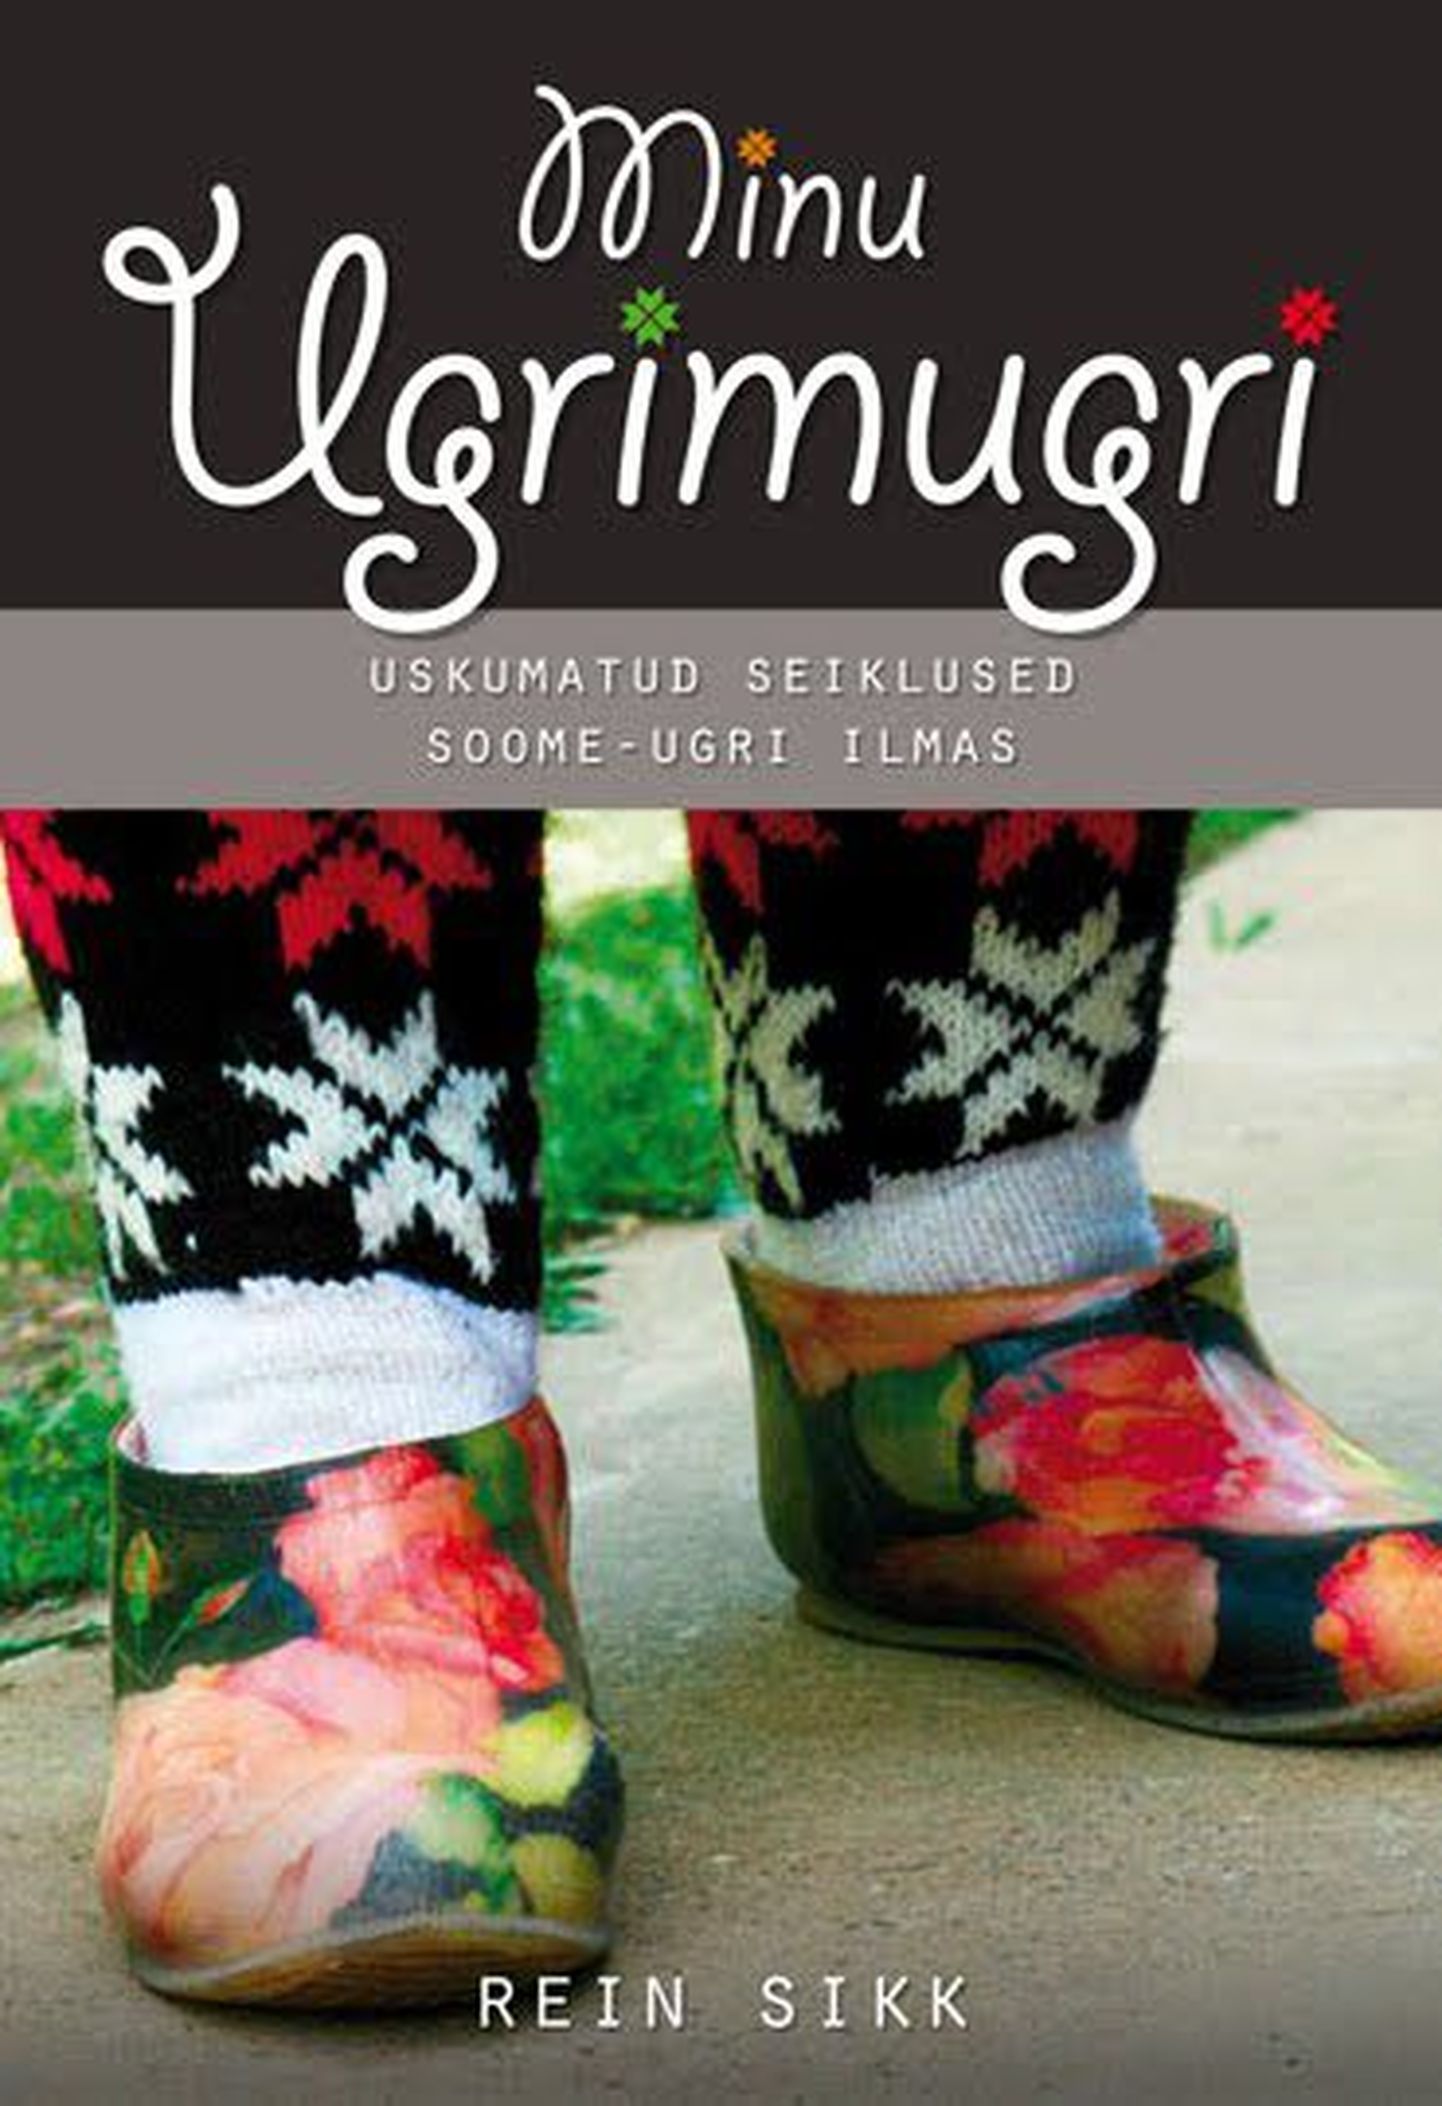 Raamat "Minu Ugrimugri".